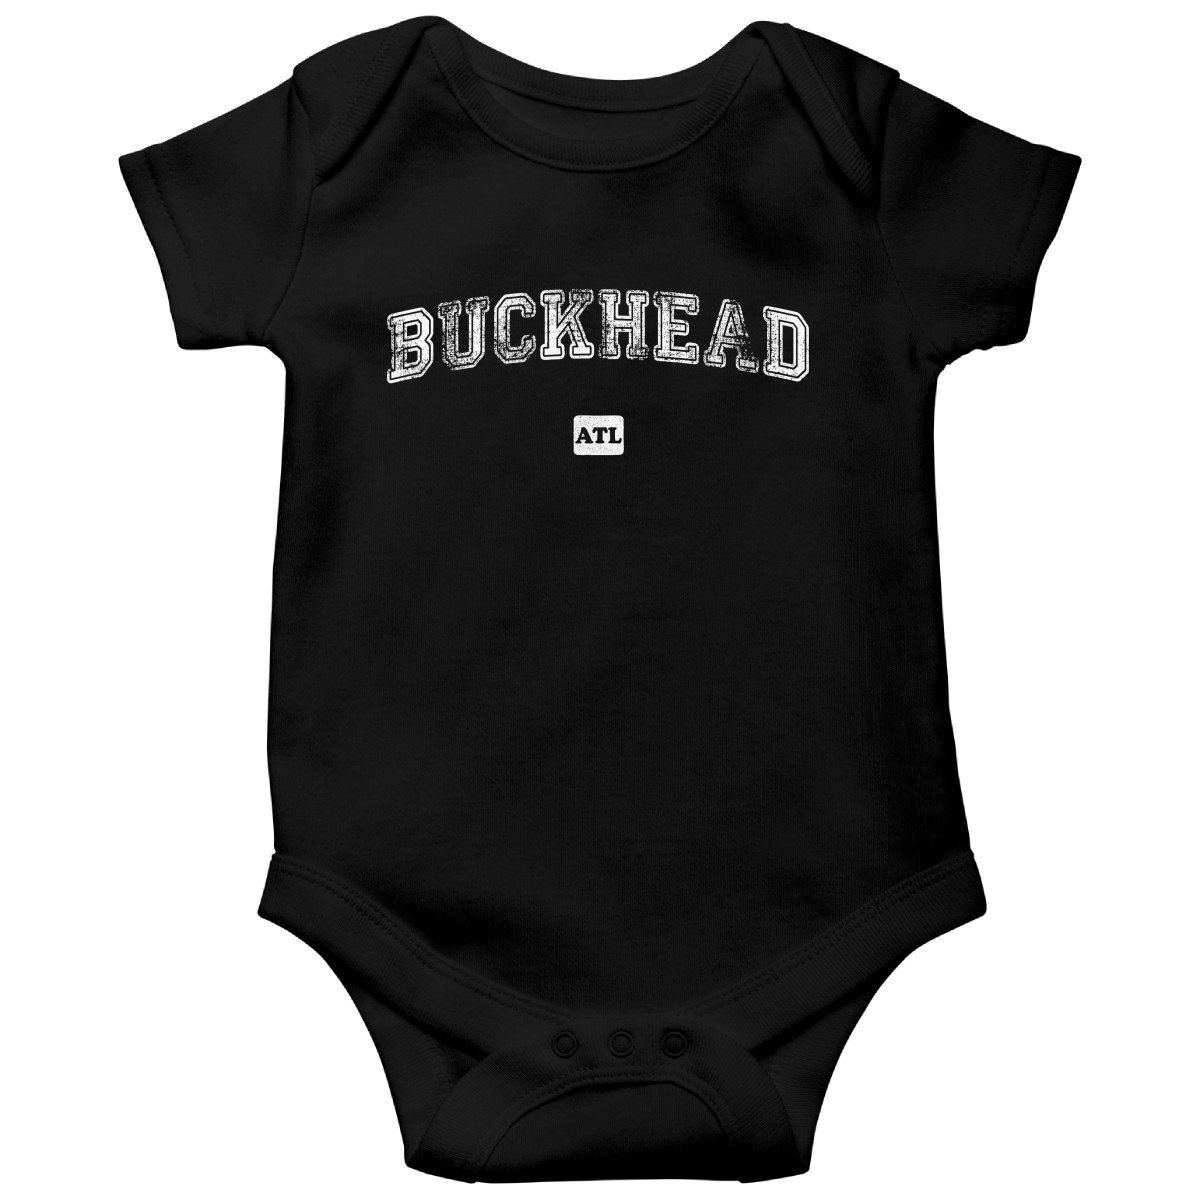 Buckhead ATL Represent Baby Bodysuits